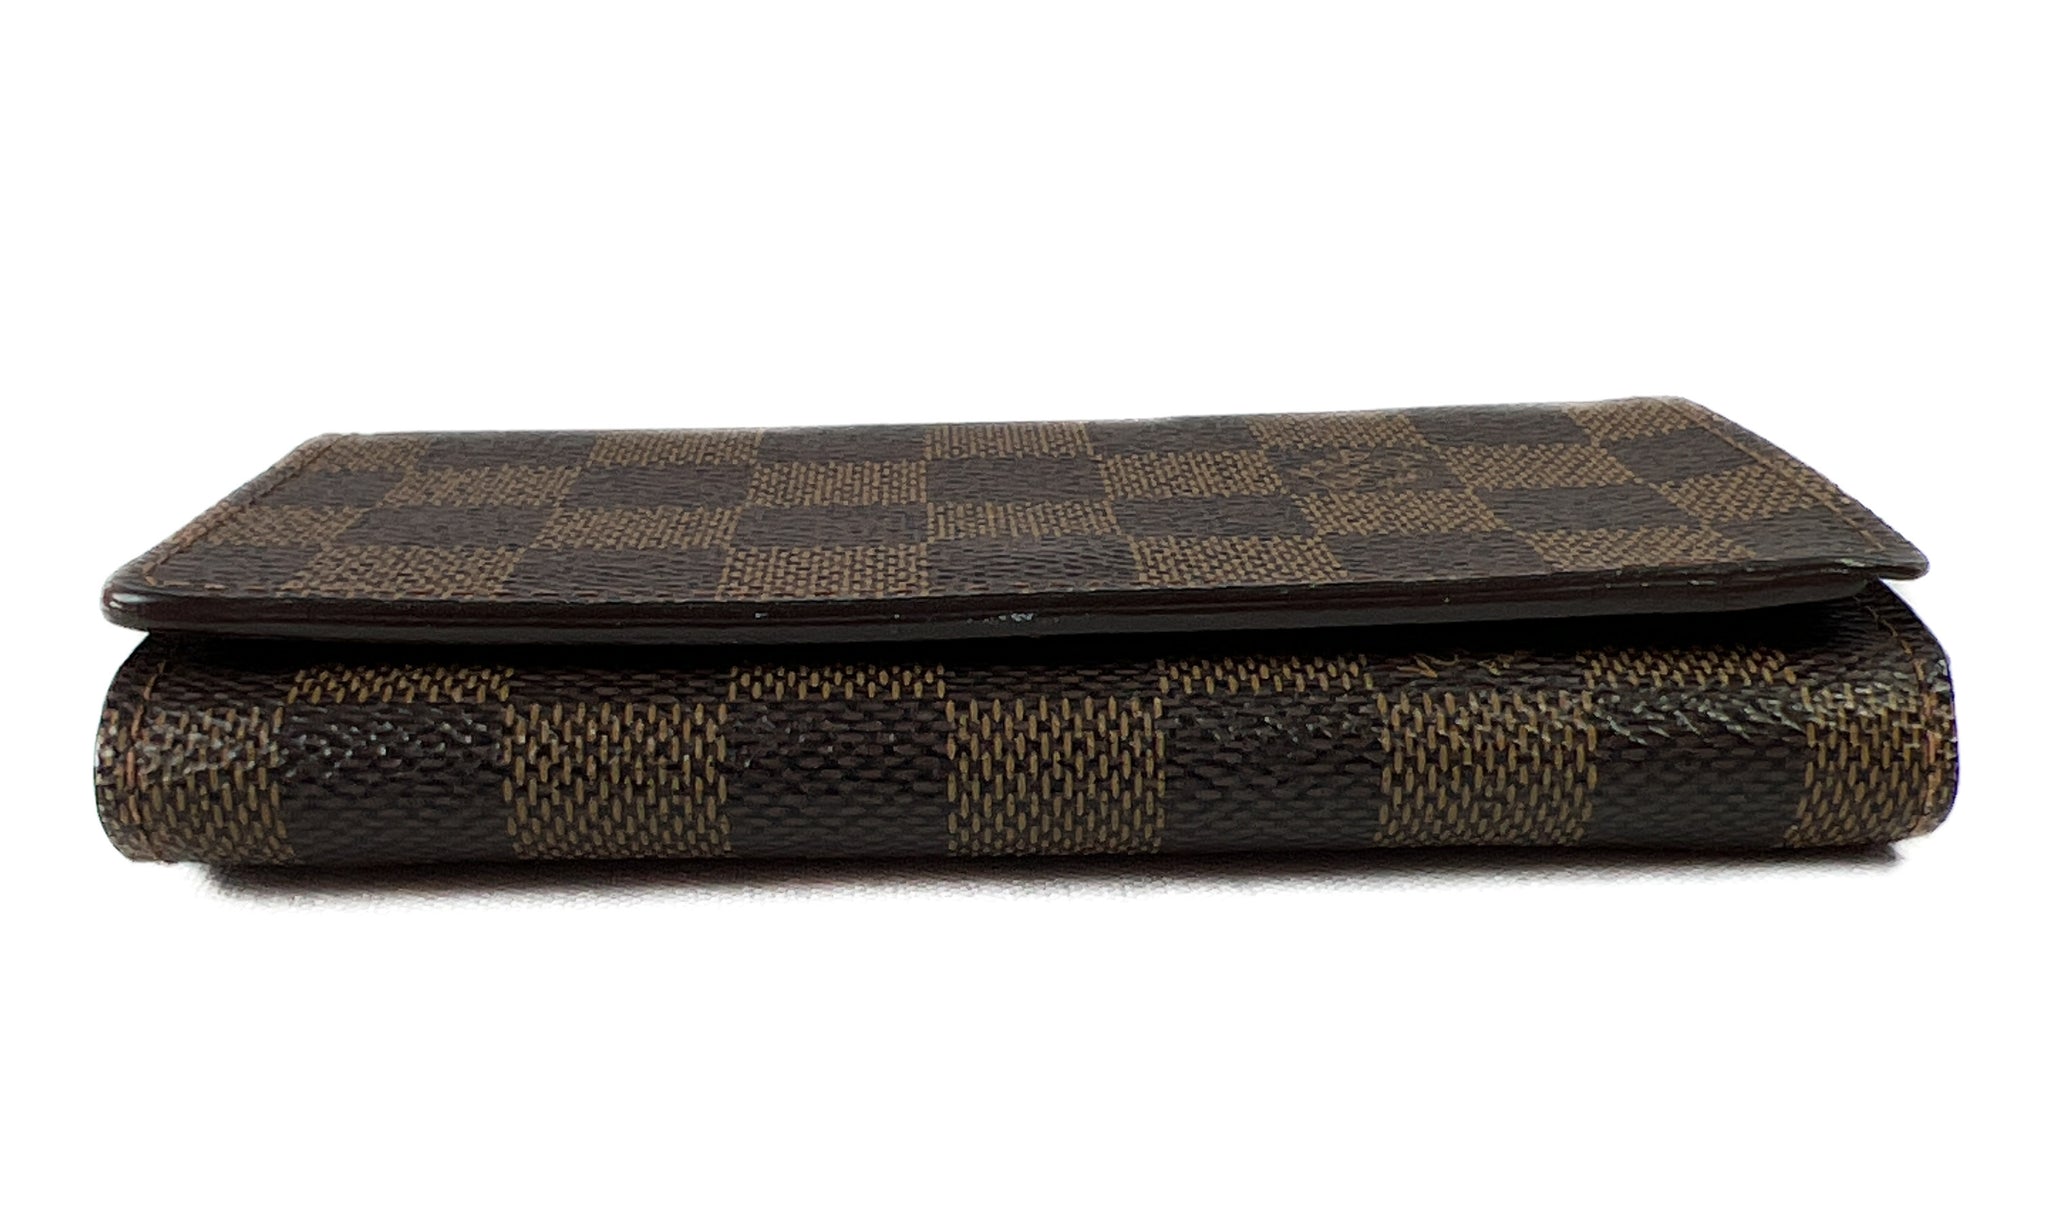 Louis Vuitton damier ebene small canvas wallet – My Girlfriend's